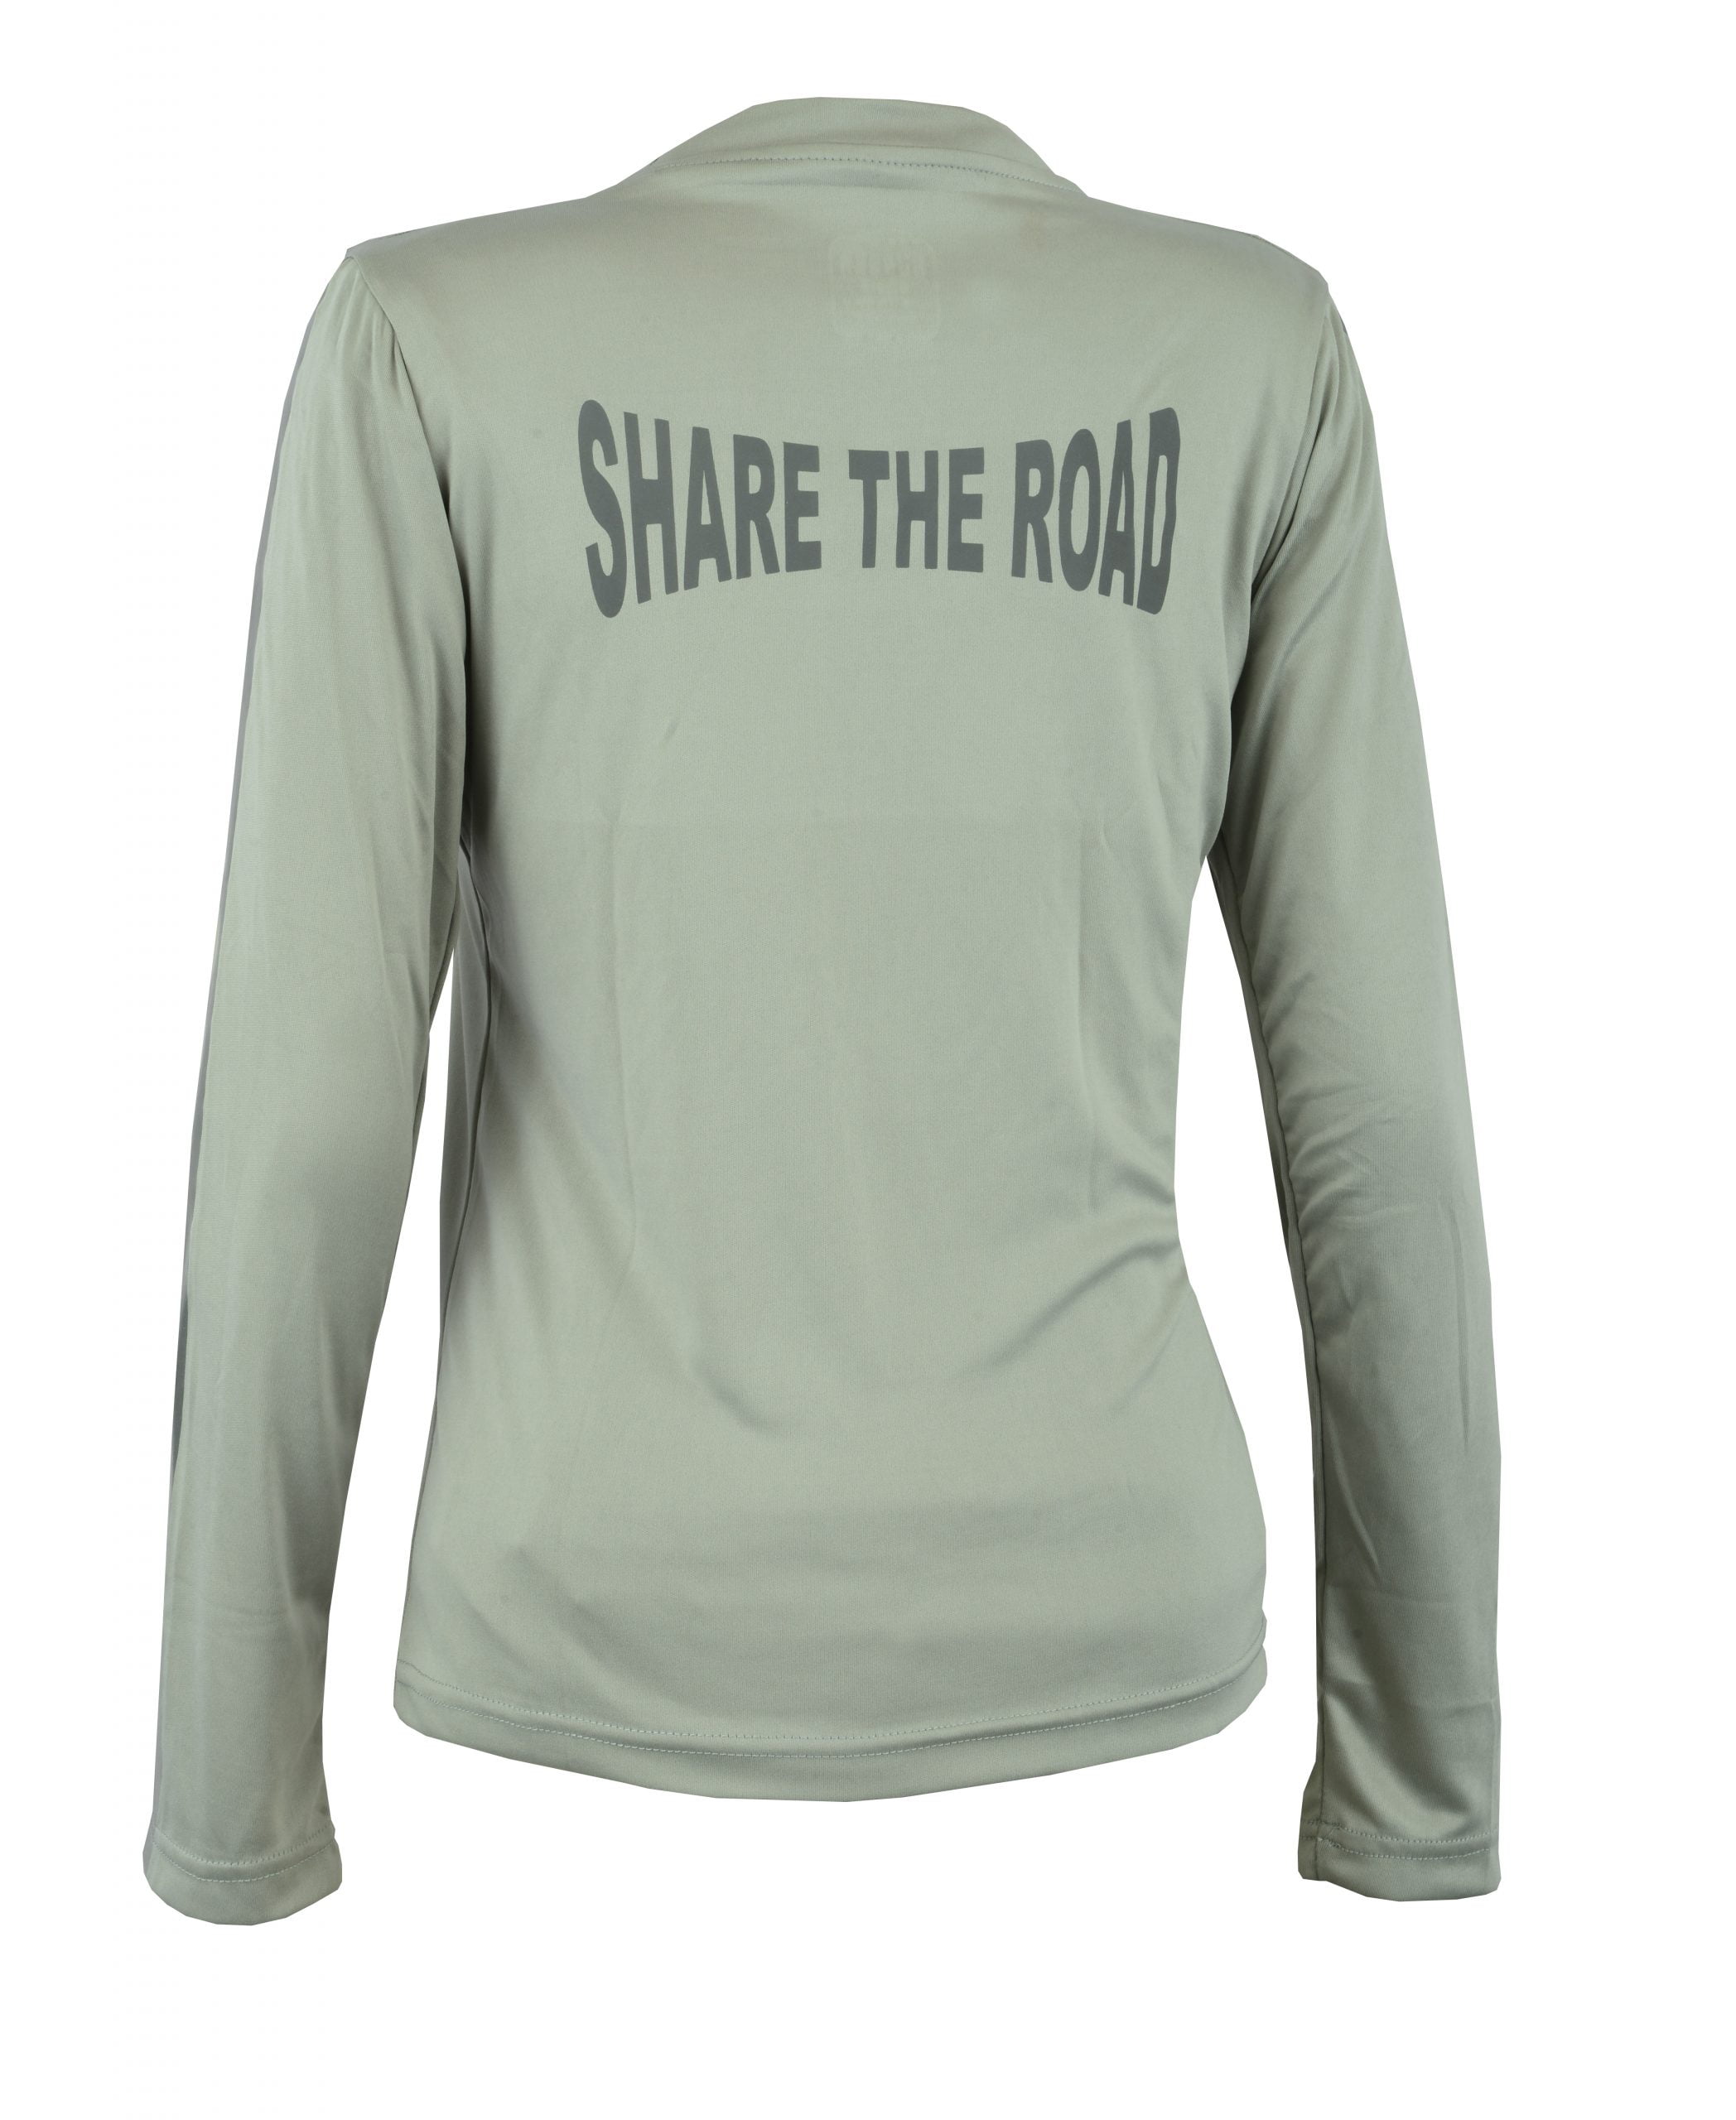 Women's Reflective Shirt -Share the Road -Grey